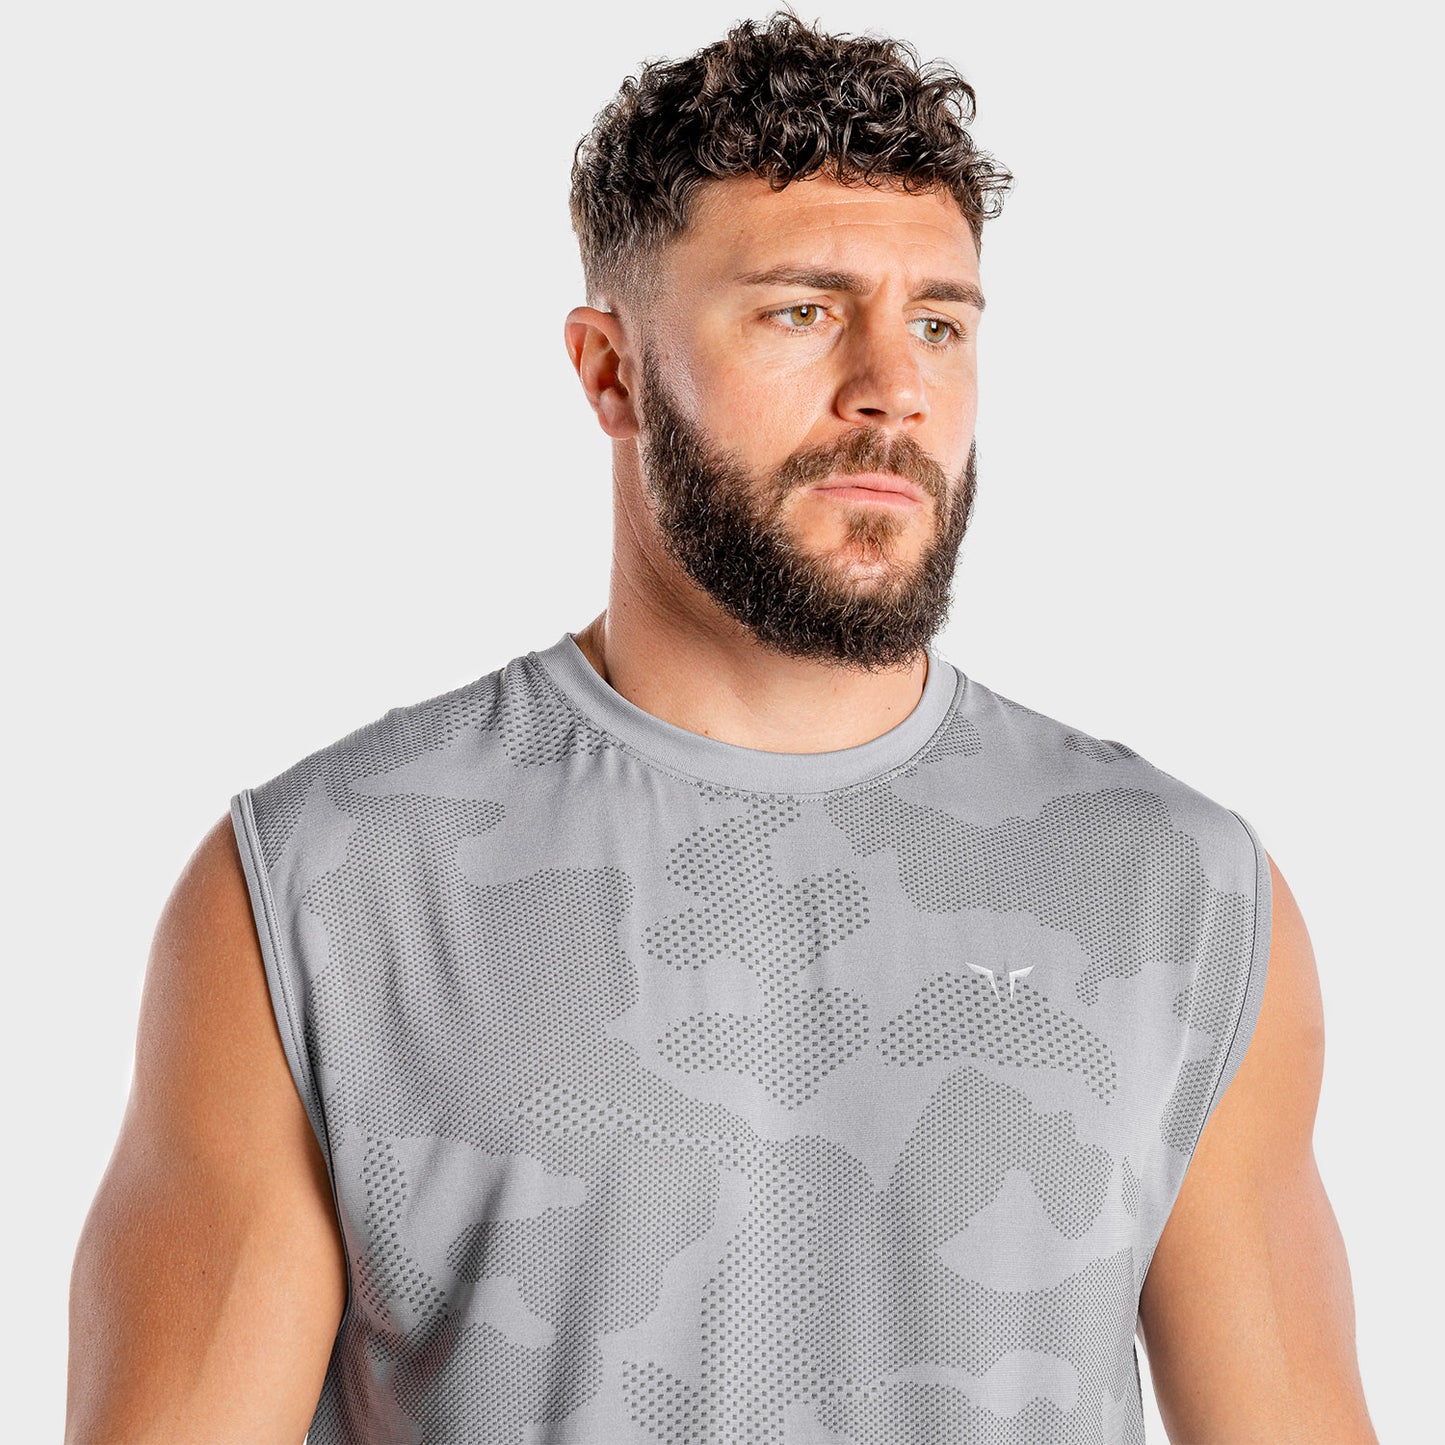 squatwolf-gym-wear-wolf-seamless-tank-grey-workout-tank-tops-for-men